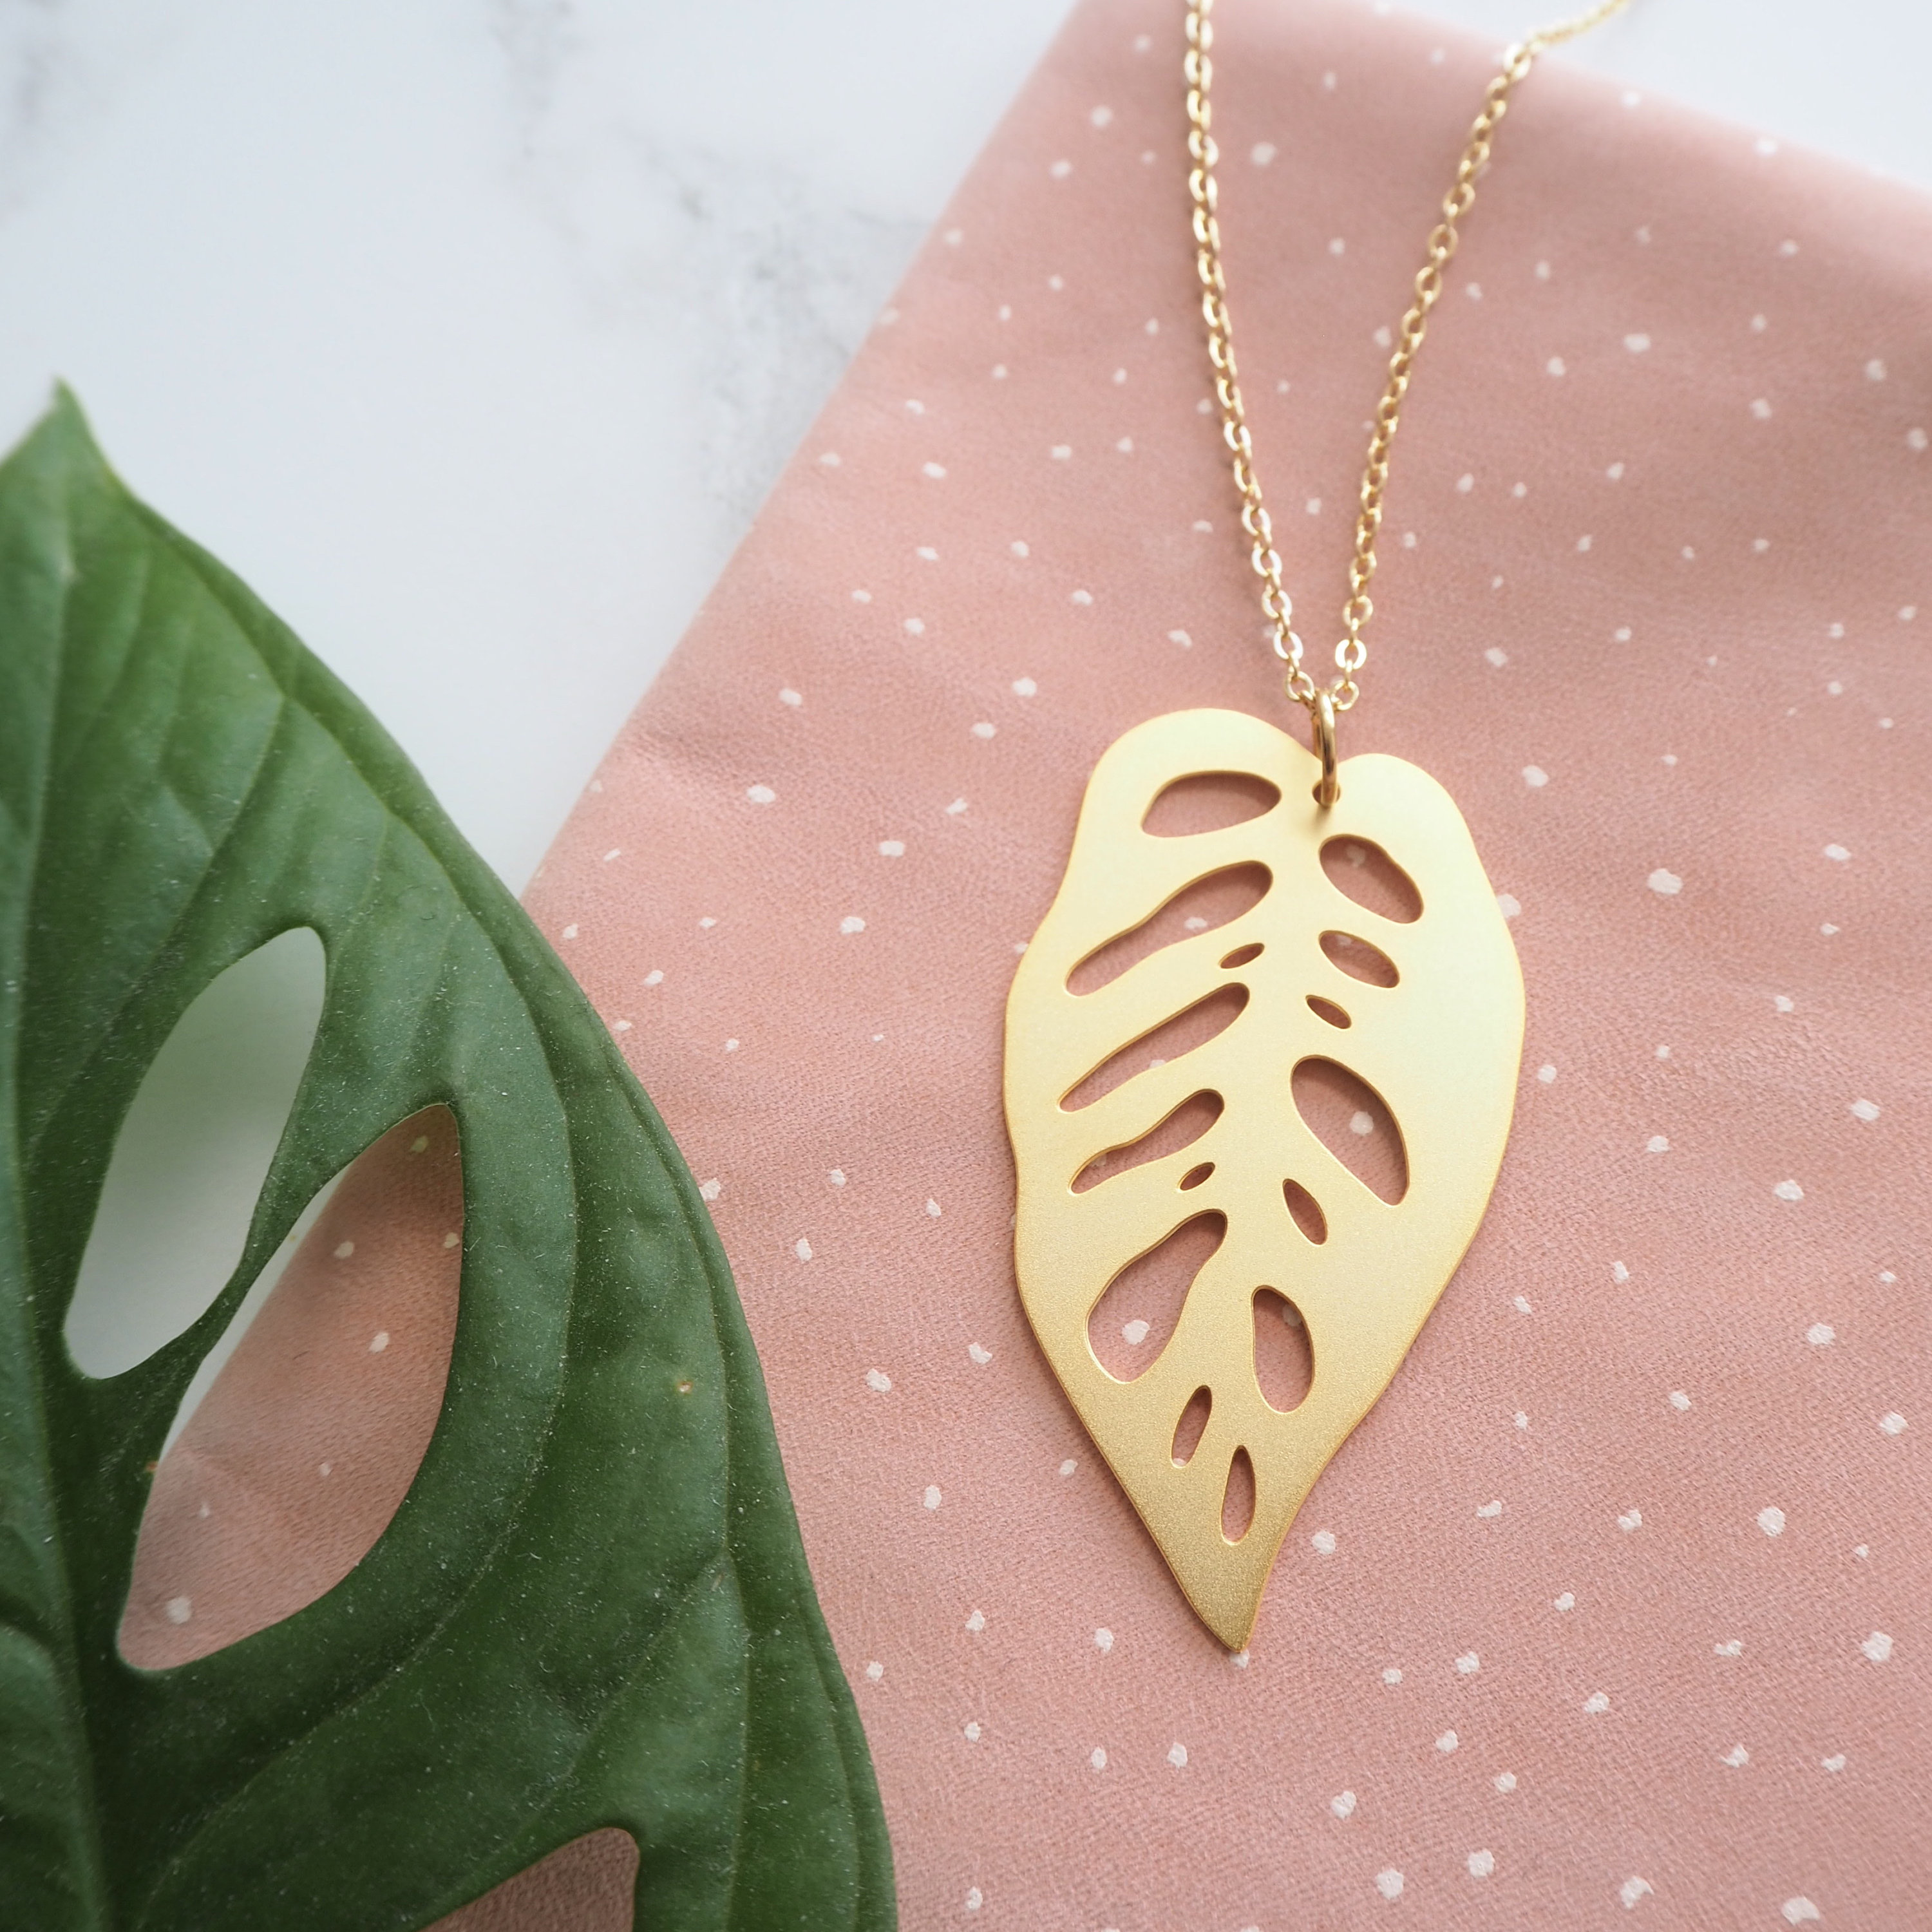 Monstera Obliqua Necklace - Gold Leaf Pendant Jewellery Cheese Plant Adansonii